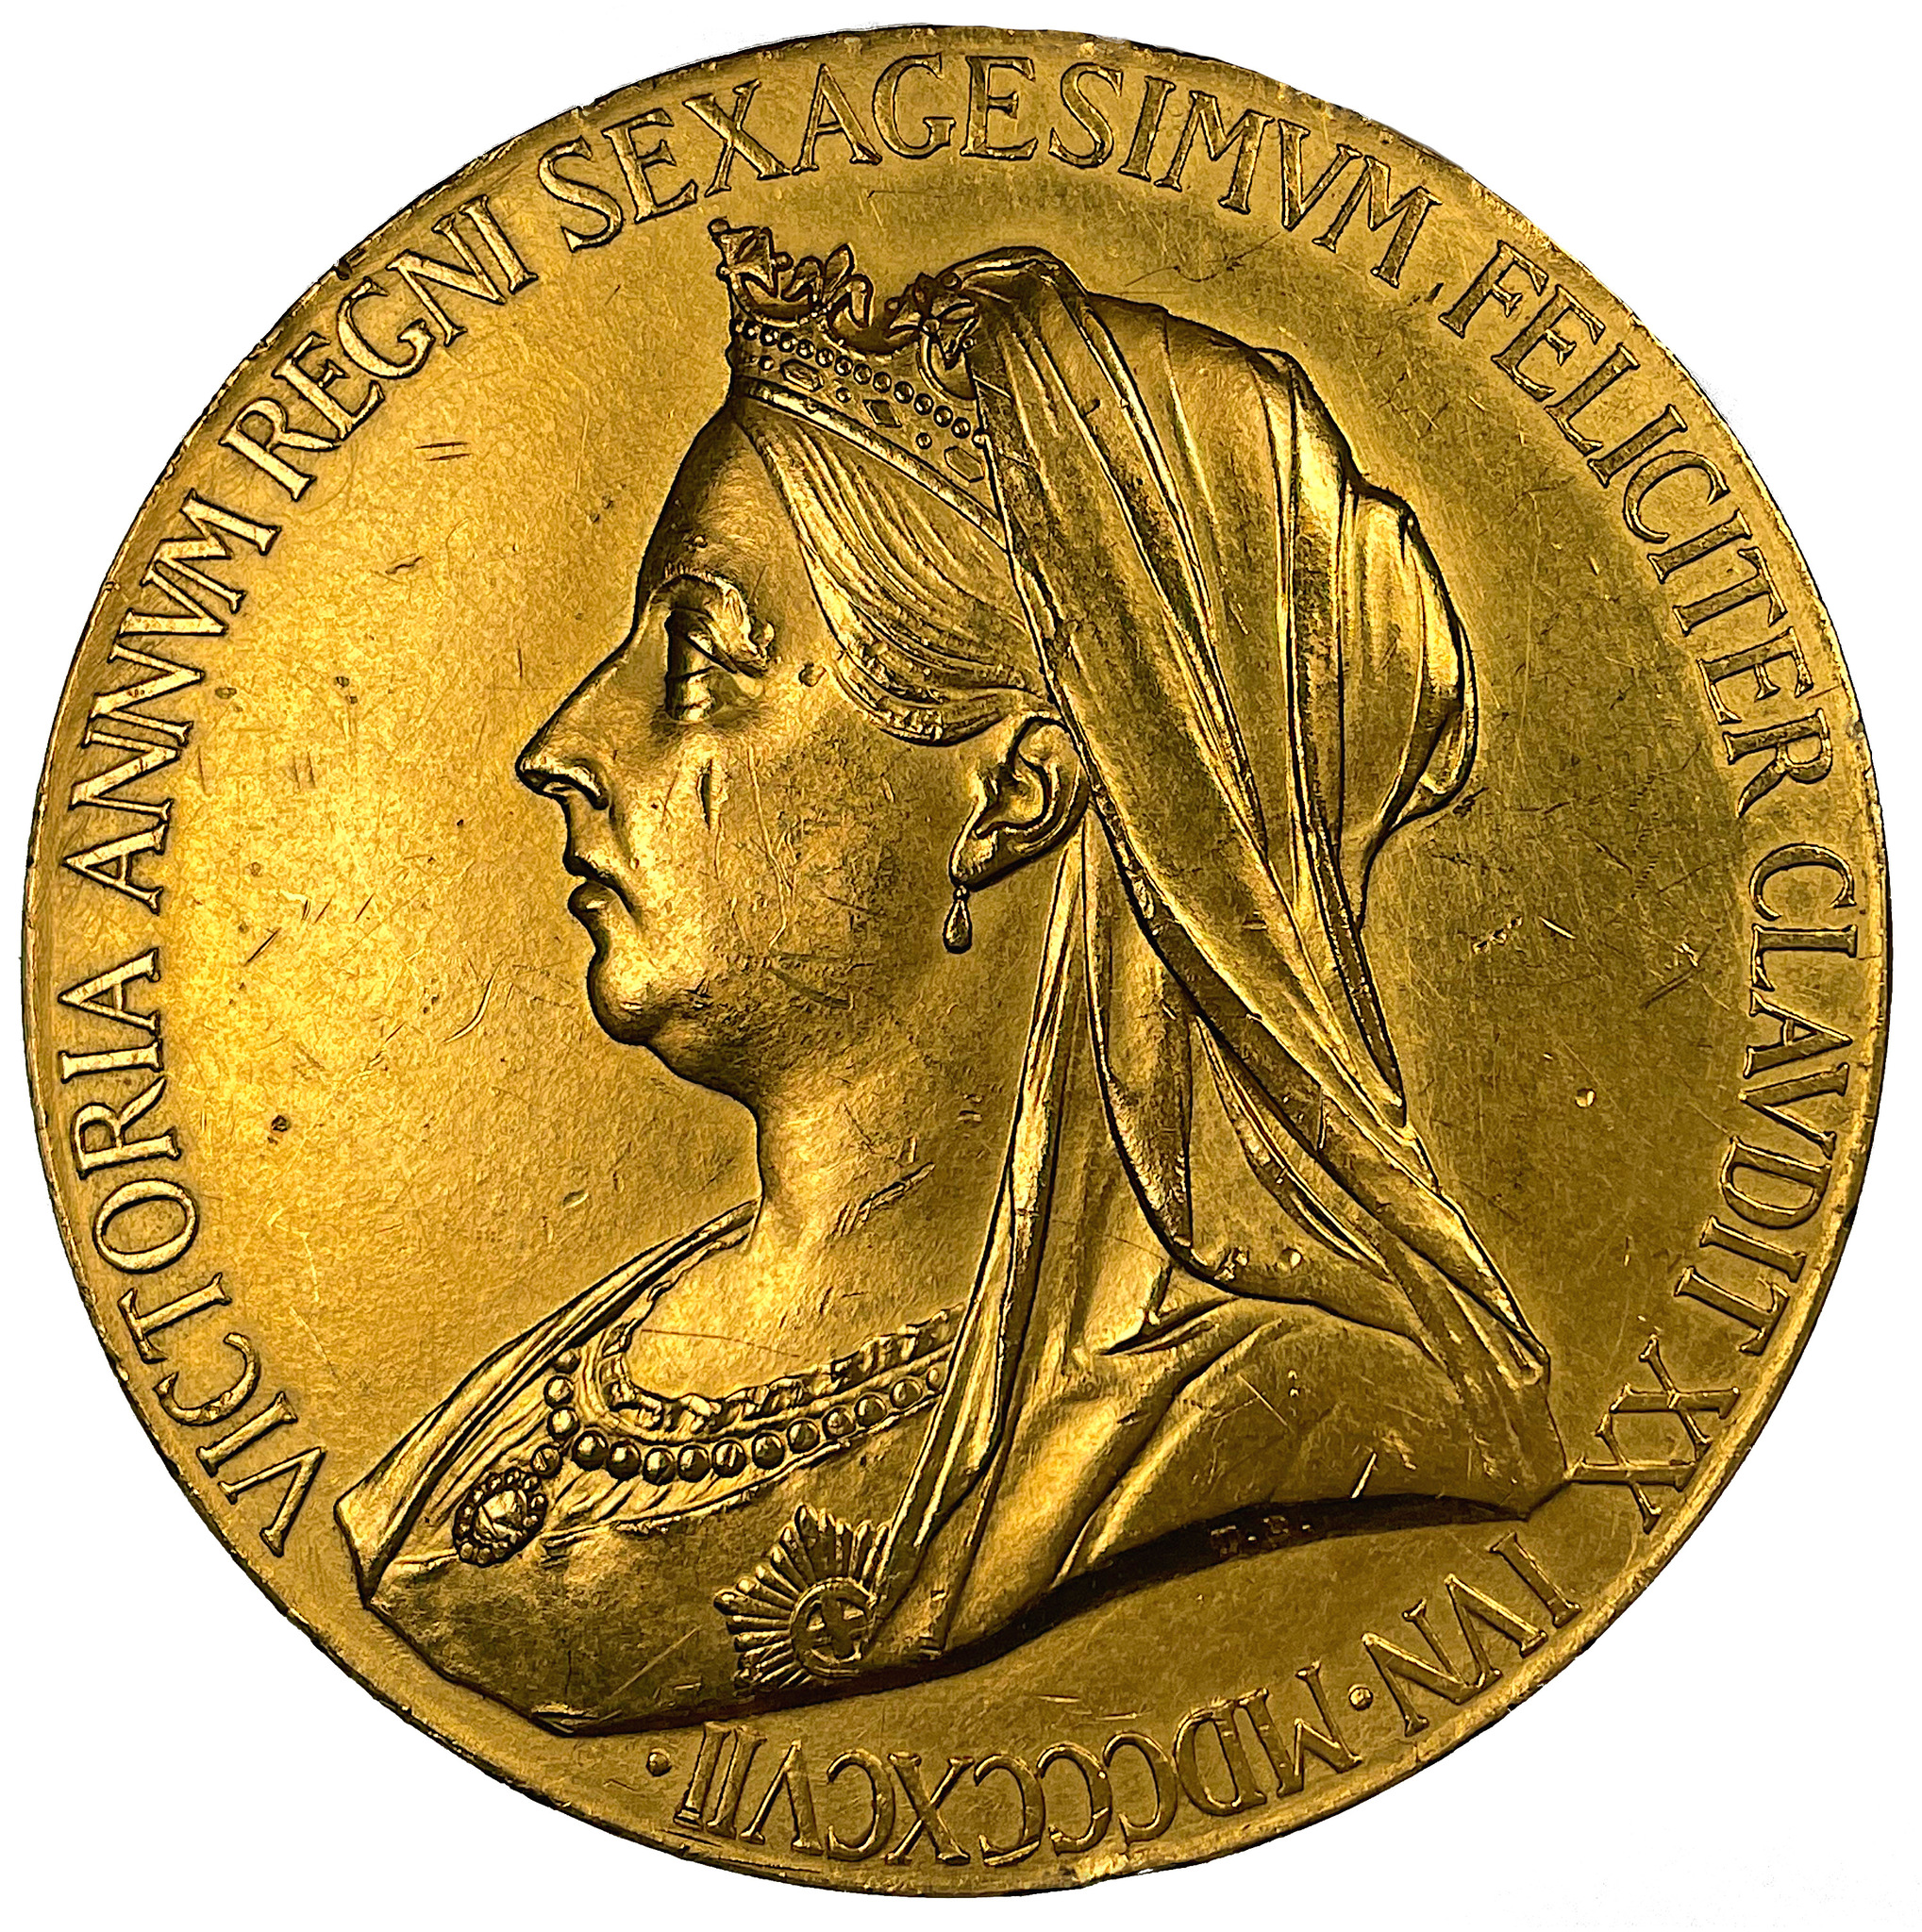 Drottning Viktorias 60-års diamant jubileum 1837-1897 - Massiv guldmedalj